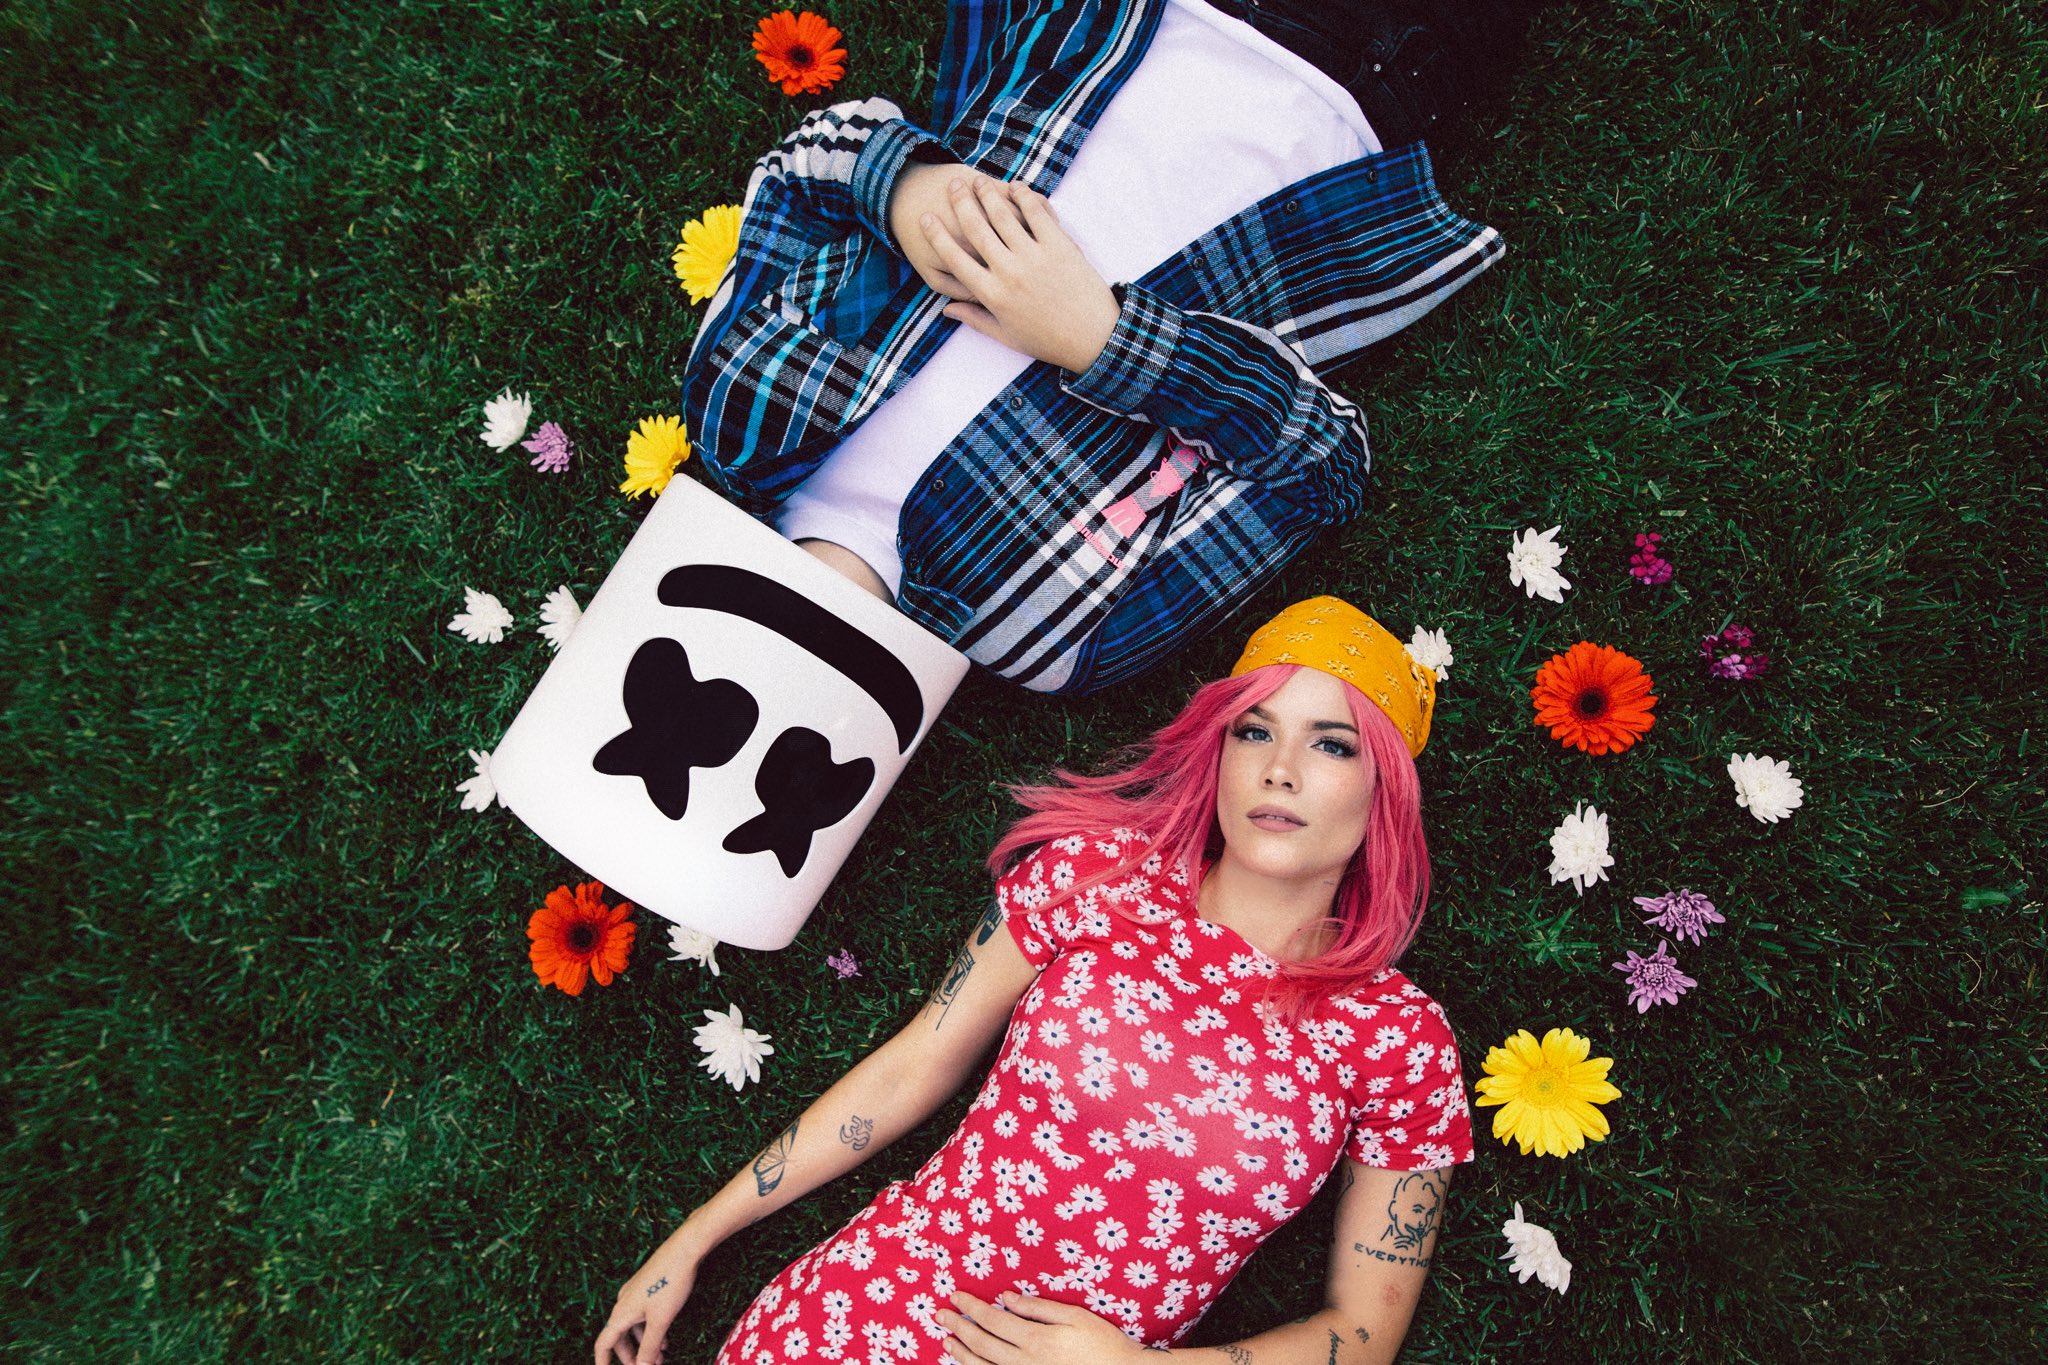 New Music: Halsey and Marshmello’s heartfelt new single ‘Be Kind’. Listen Here: - 77 MUGIBSON